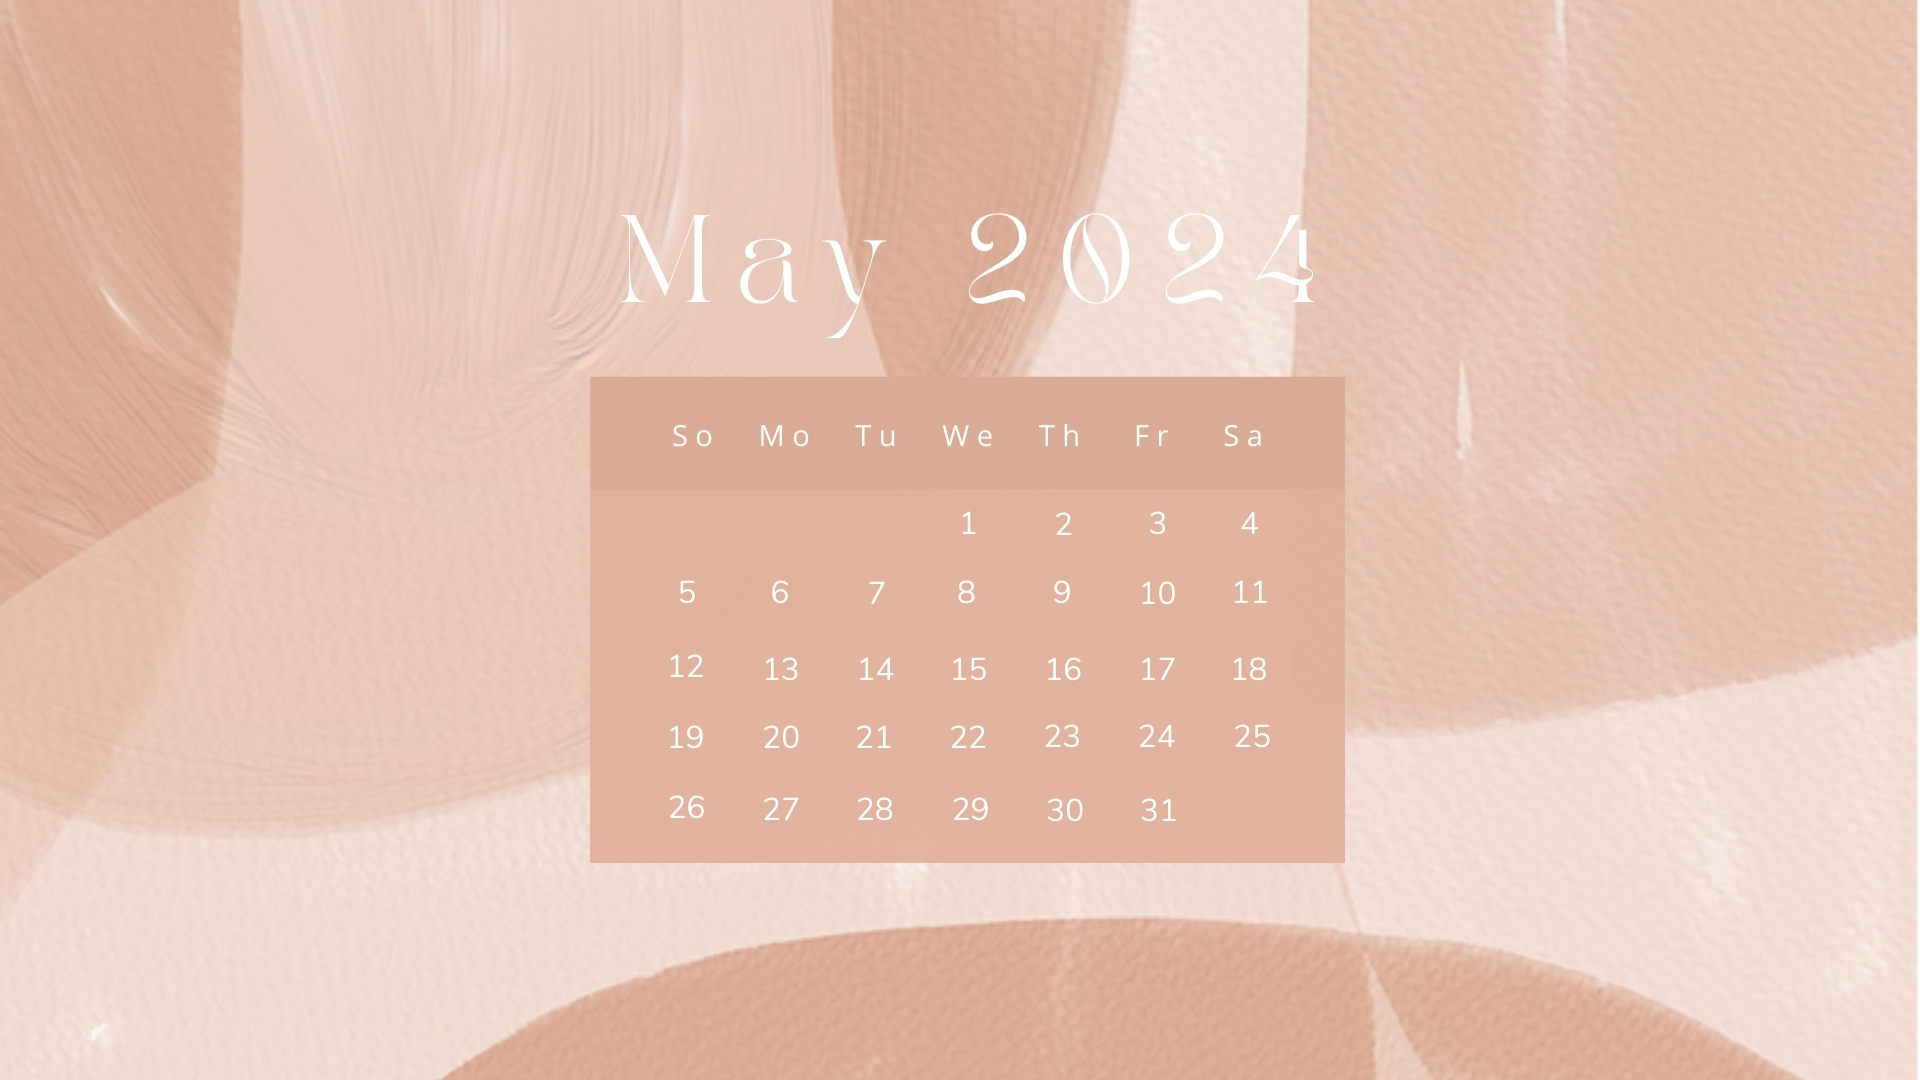 May 2024 Calendar Wallpapers